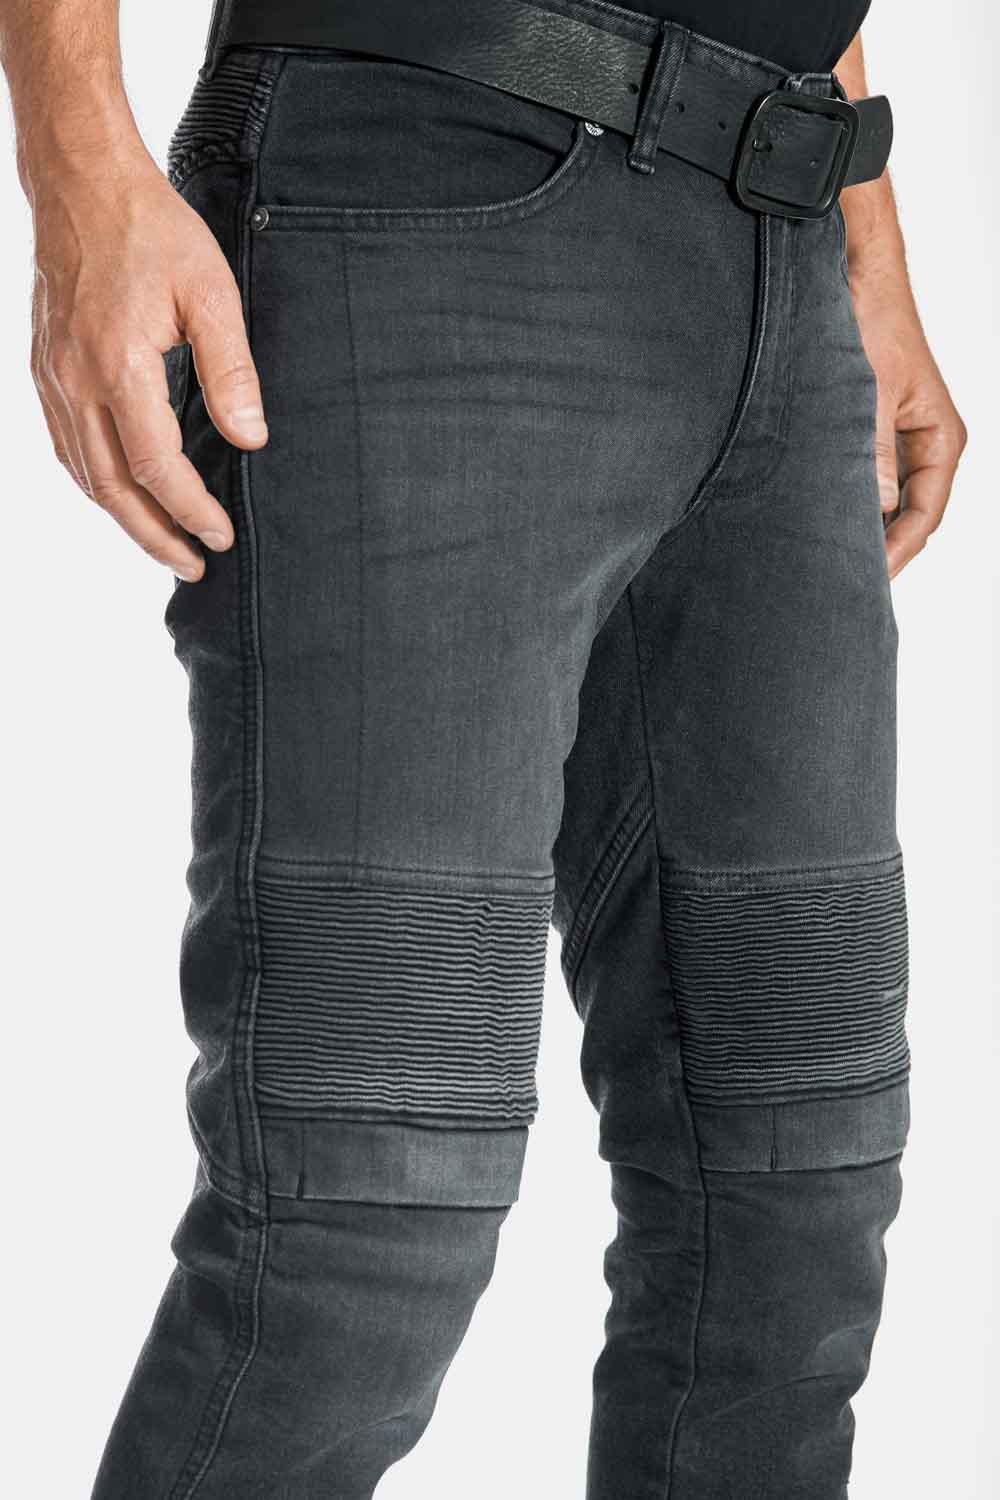 Karl Devil 9 – Men's Slim-Fit Motorcycle Jeans knees area front view